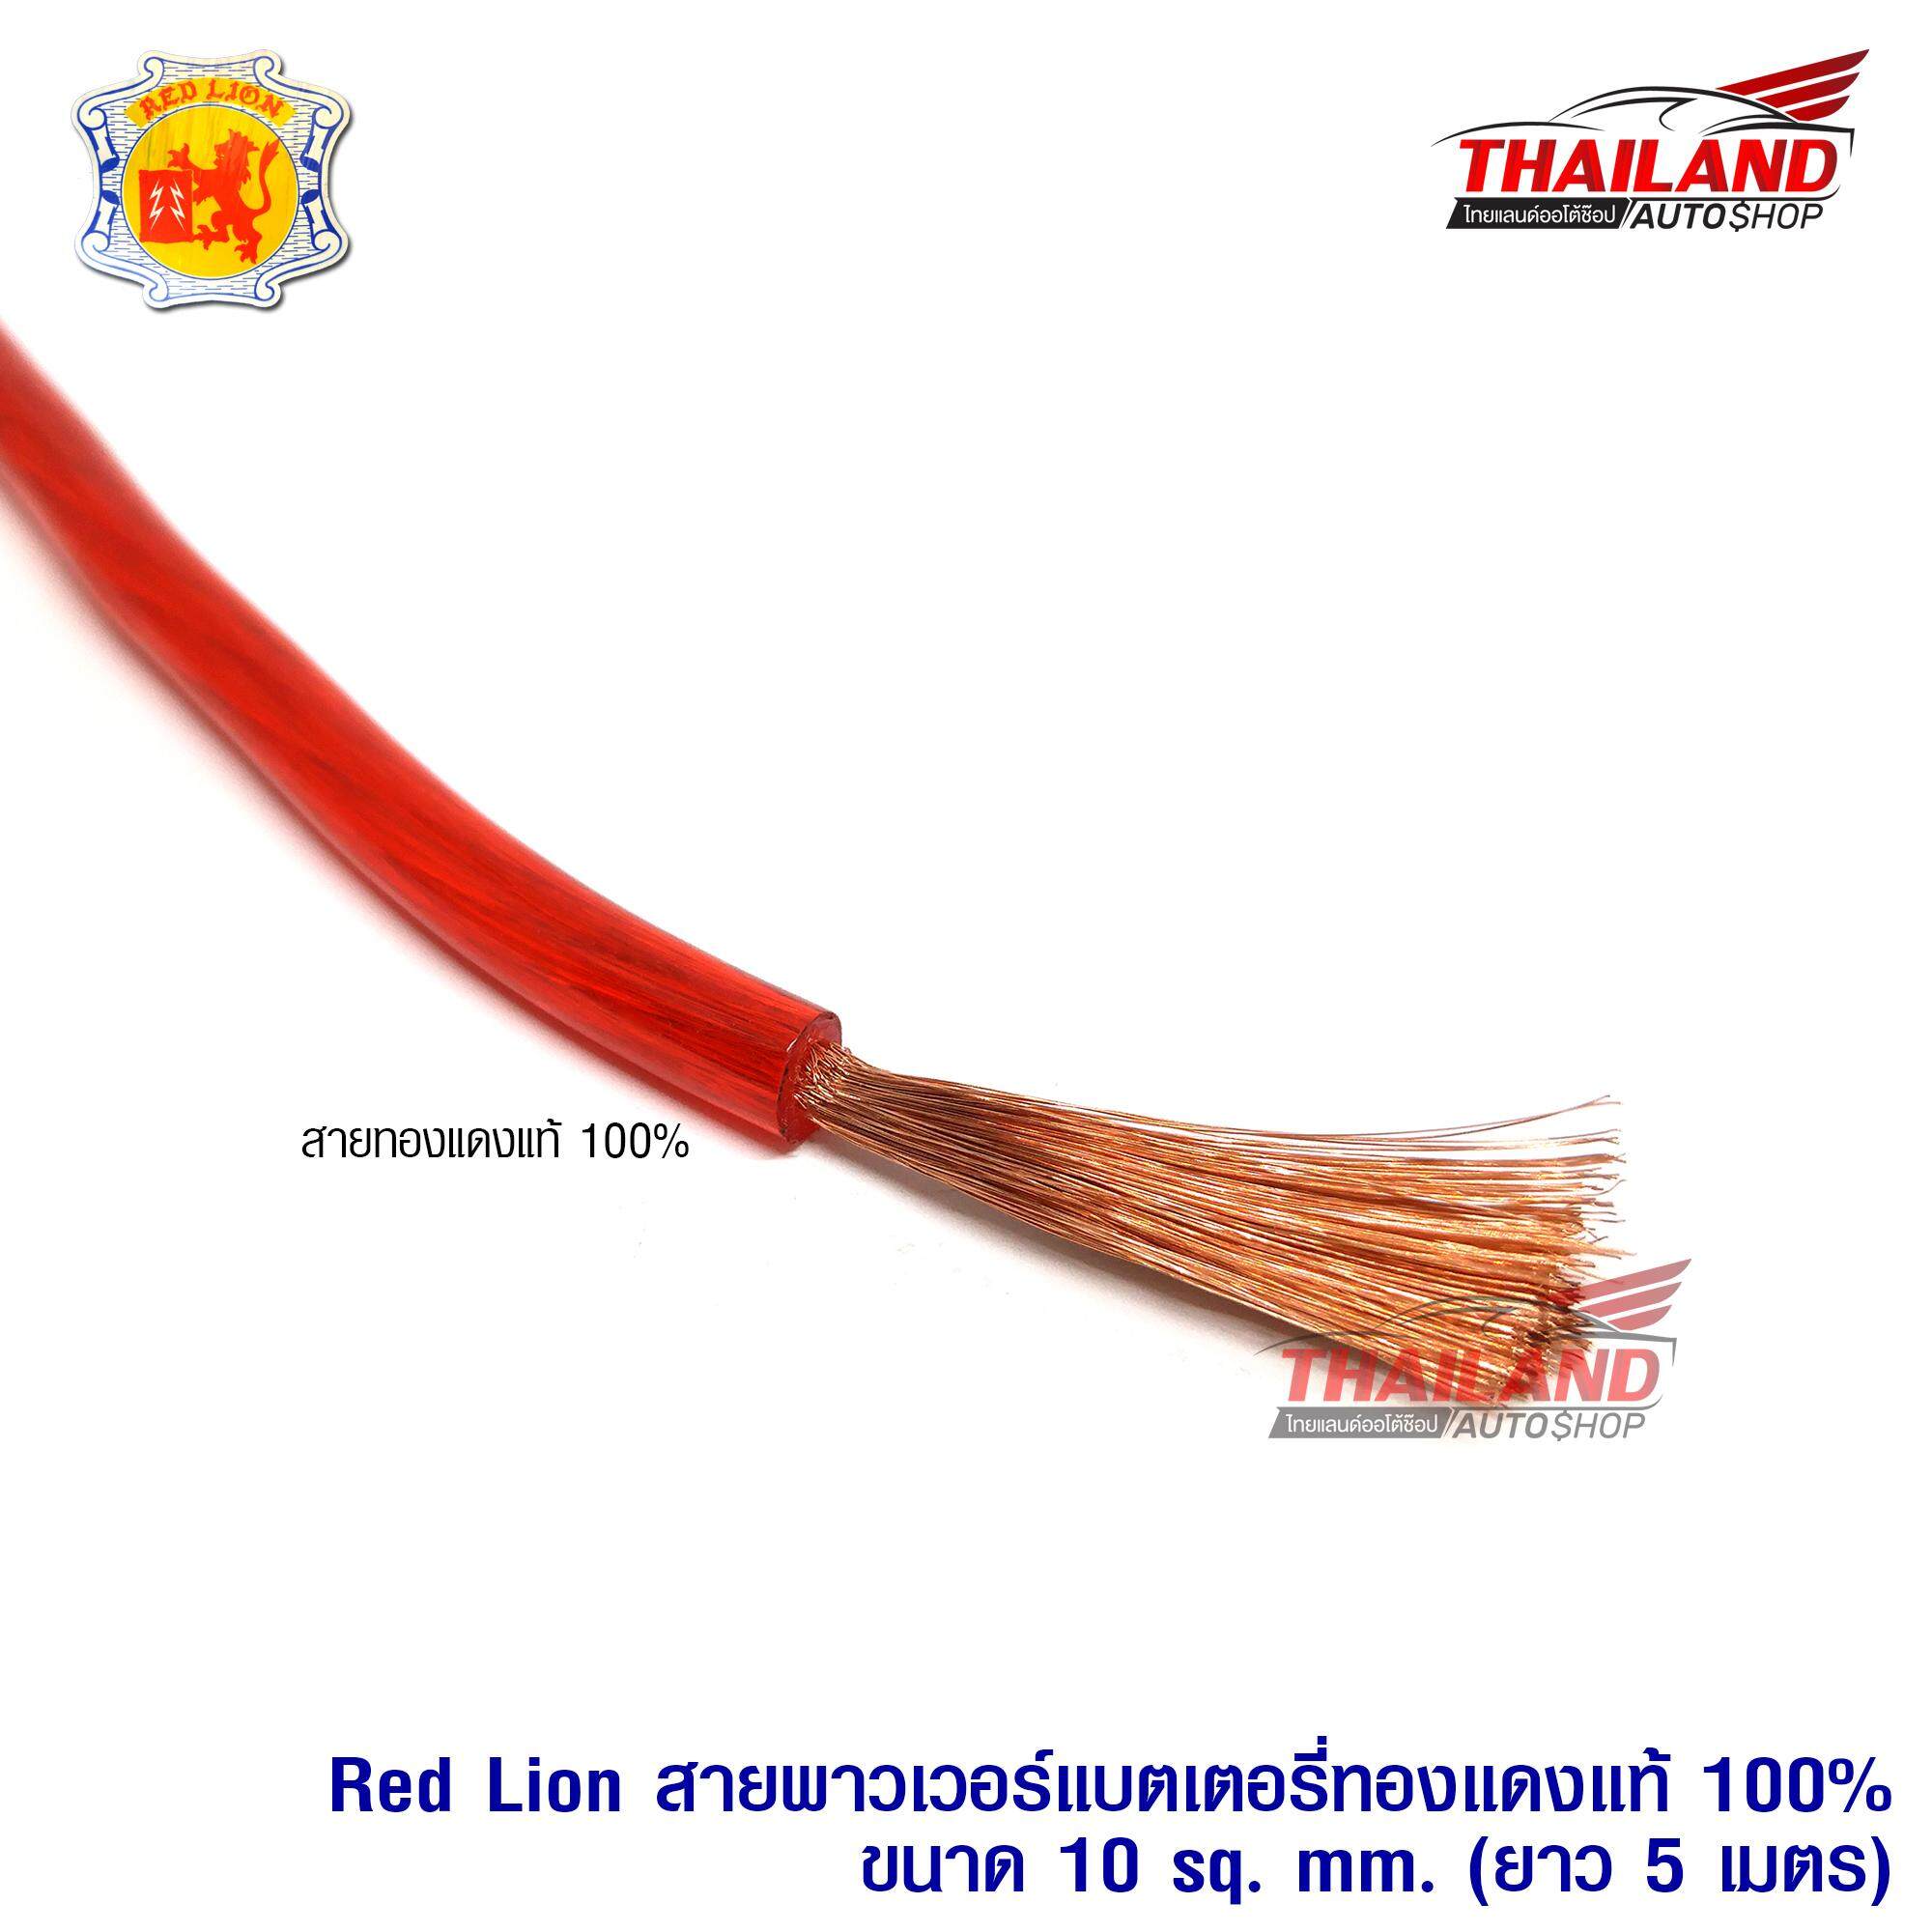 Red Lion สายพาวเวอร์แบตเตอรี่ทองแดงแท้ 100% ขนาด 10 sq.mm. 5 เมตร